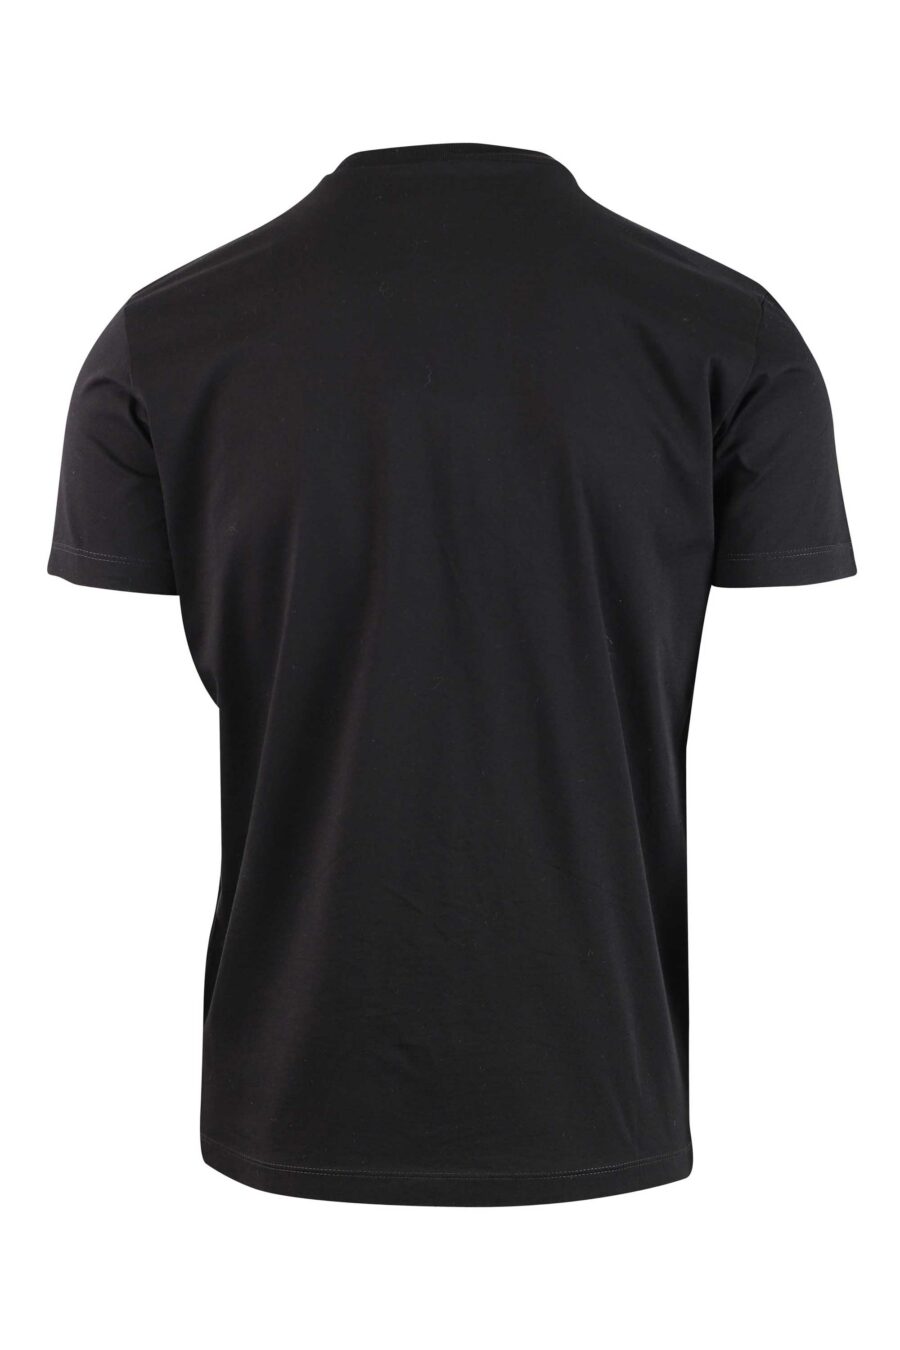 Camiseta negra con maxilogo multicolor - IMG 0036 1